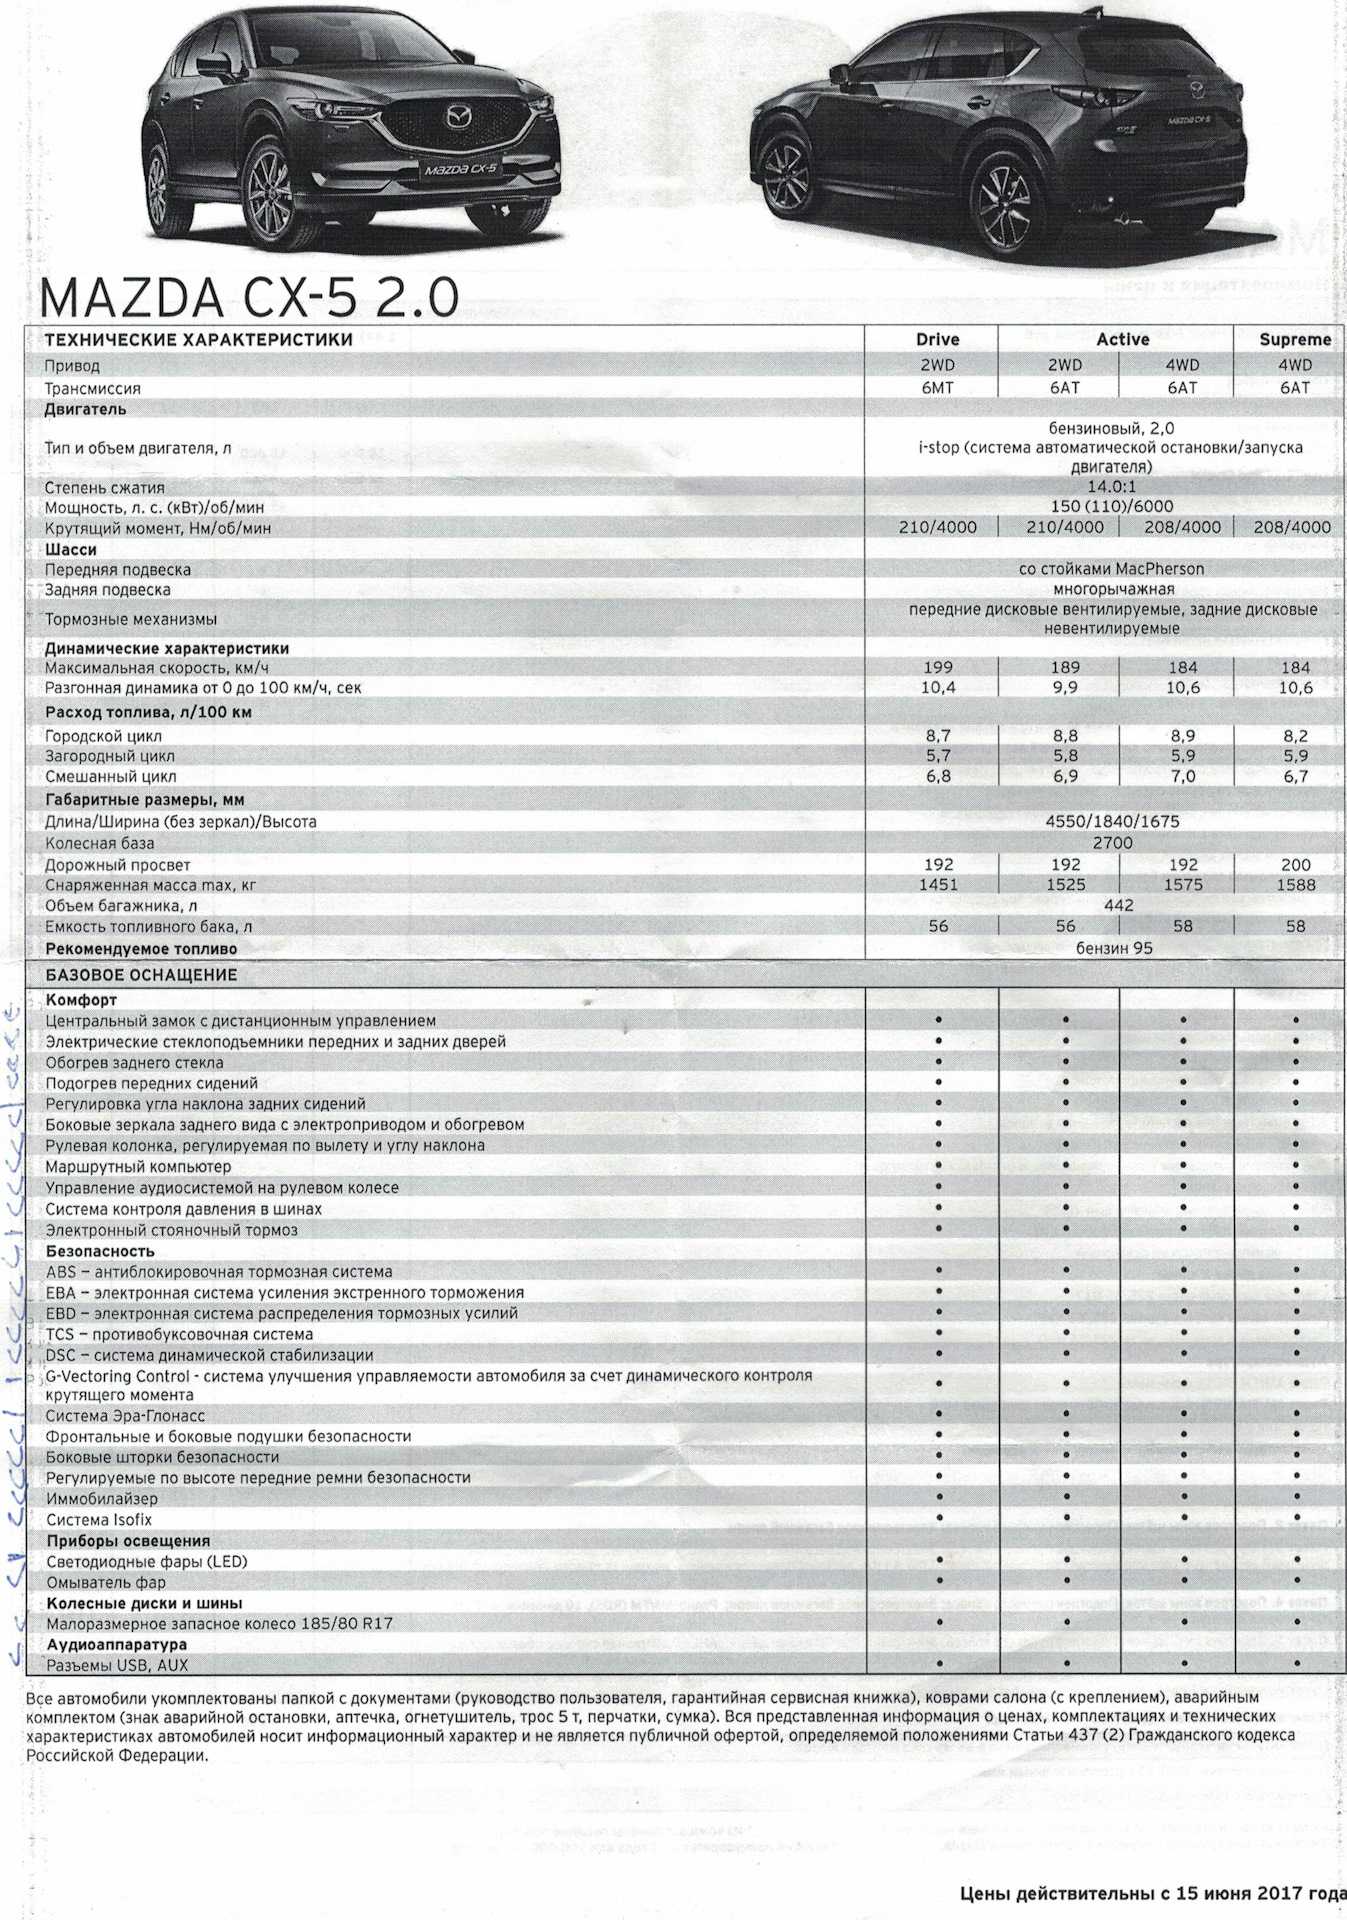 Мазда сх 5 (mazda cx5) технические характеристики, комплектации
мазда сх 5 (mazda cx5) технические характеристики, комплектации